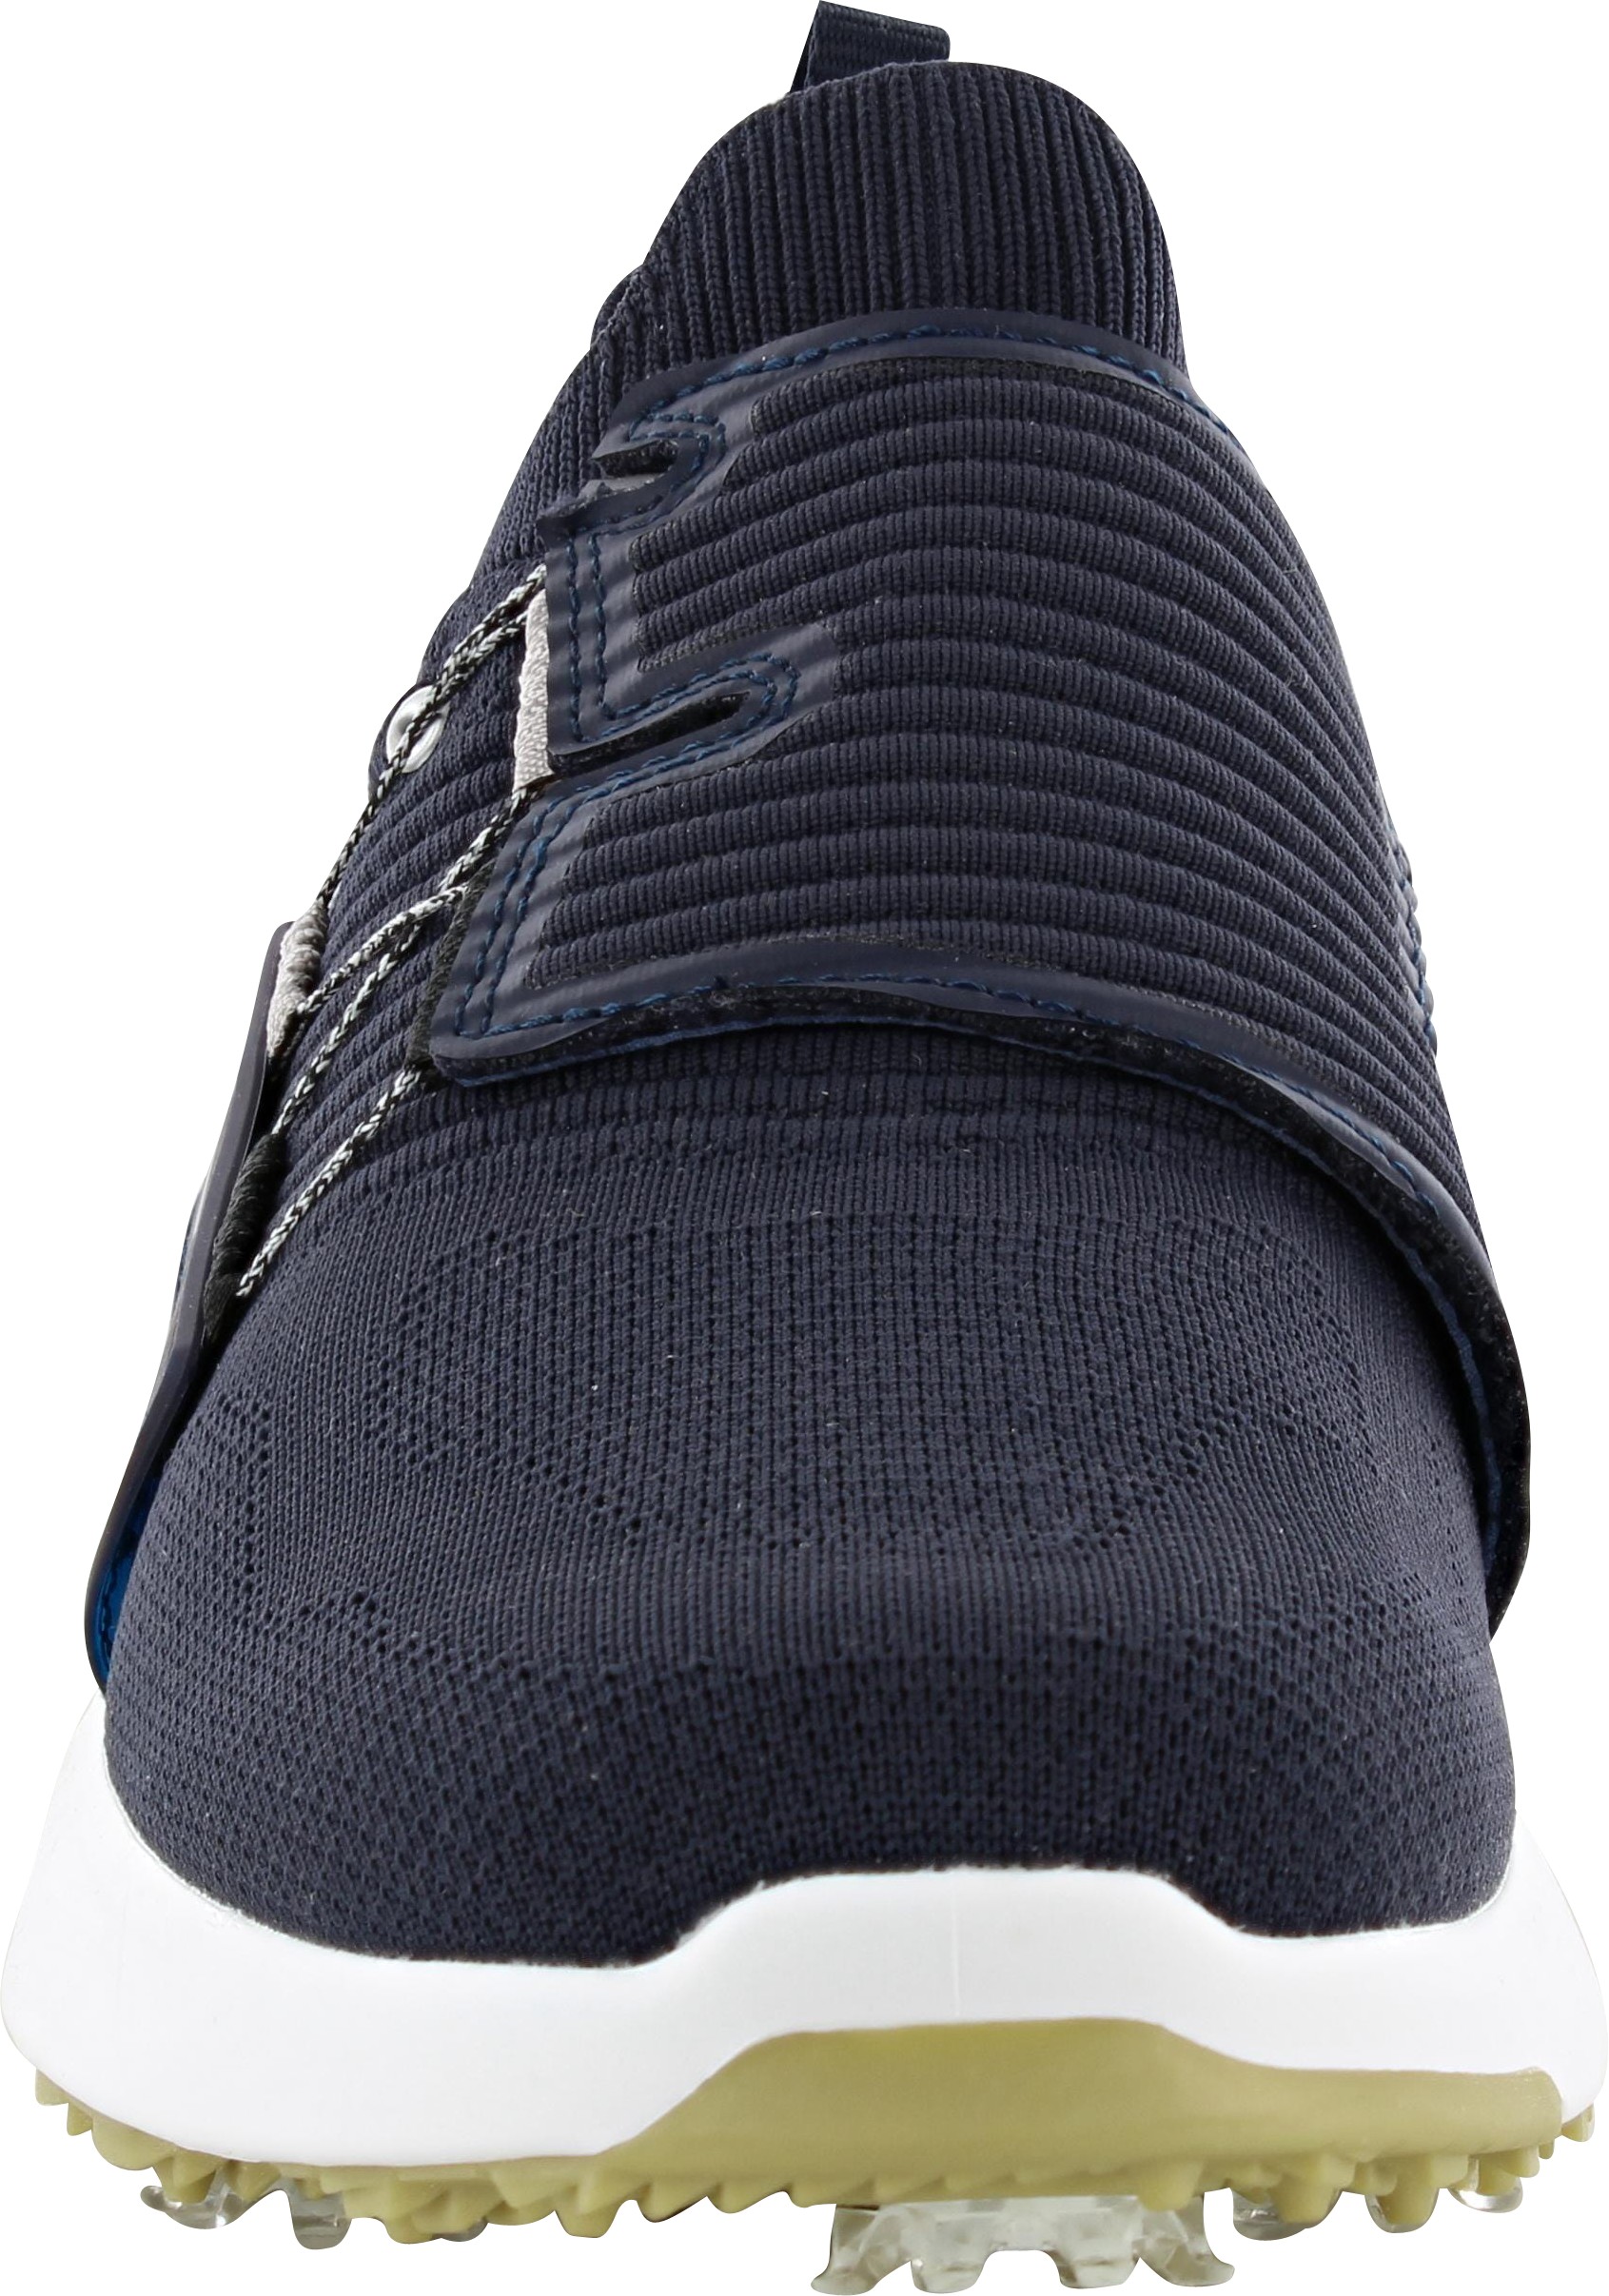 FootJoy Men's Hyperflex BOA Golf Shoes 51089 - Navy/White/Gold - 9.5 - Wide - image 2 of 8